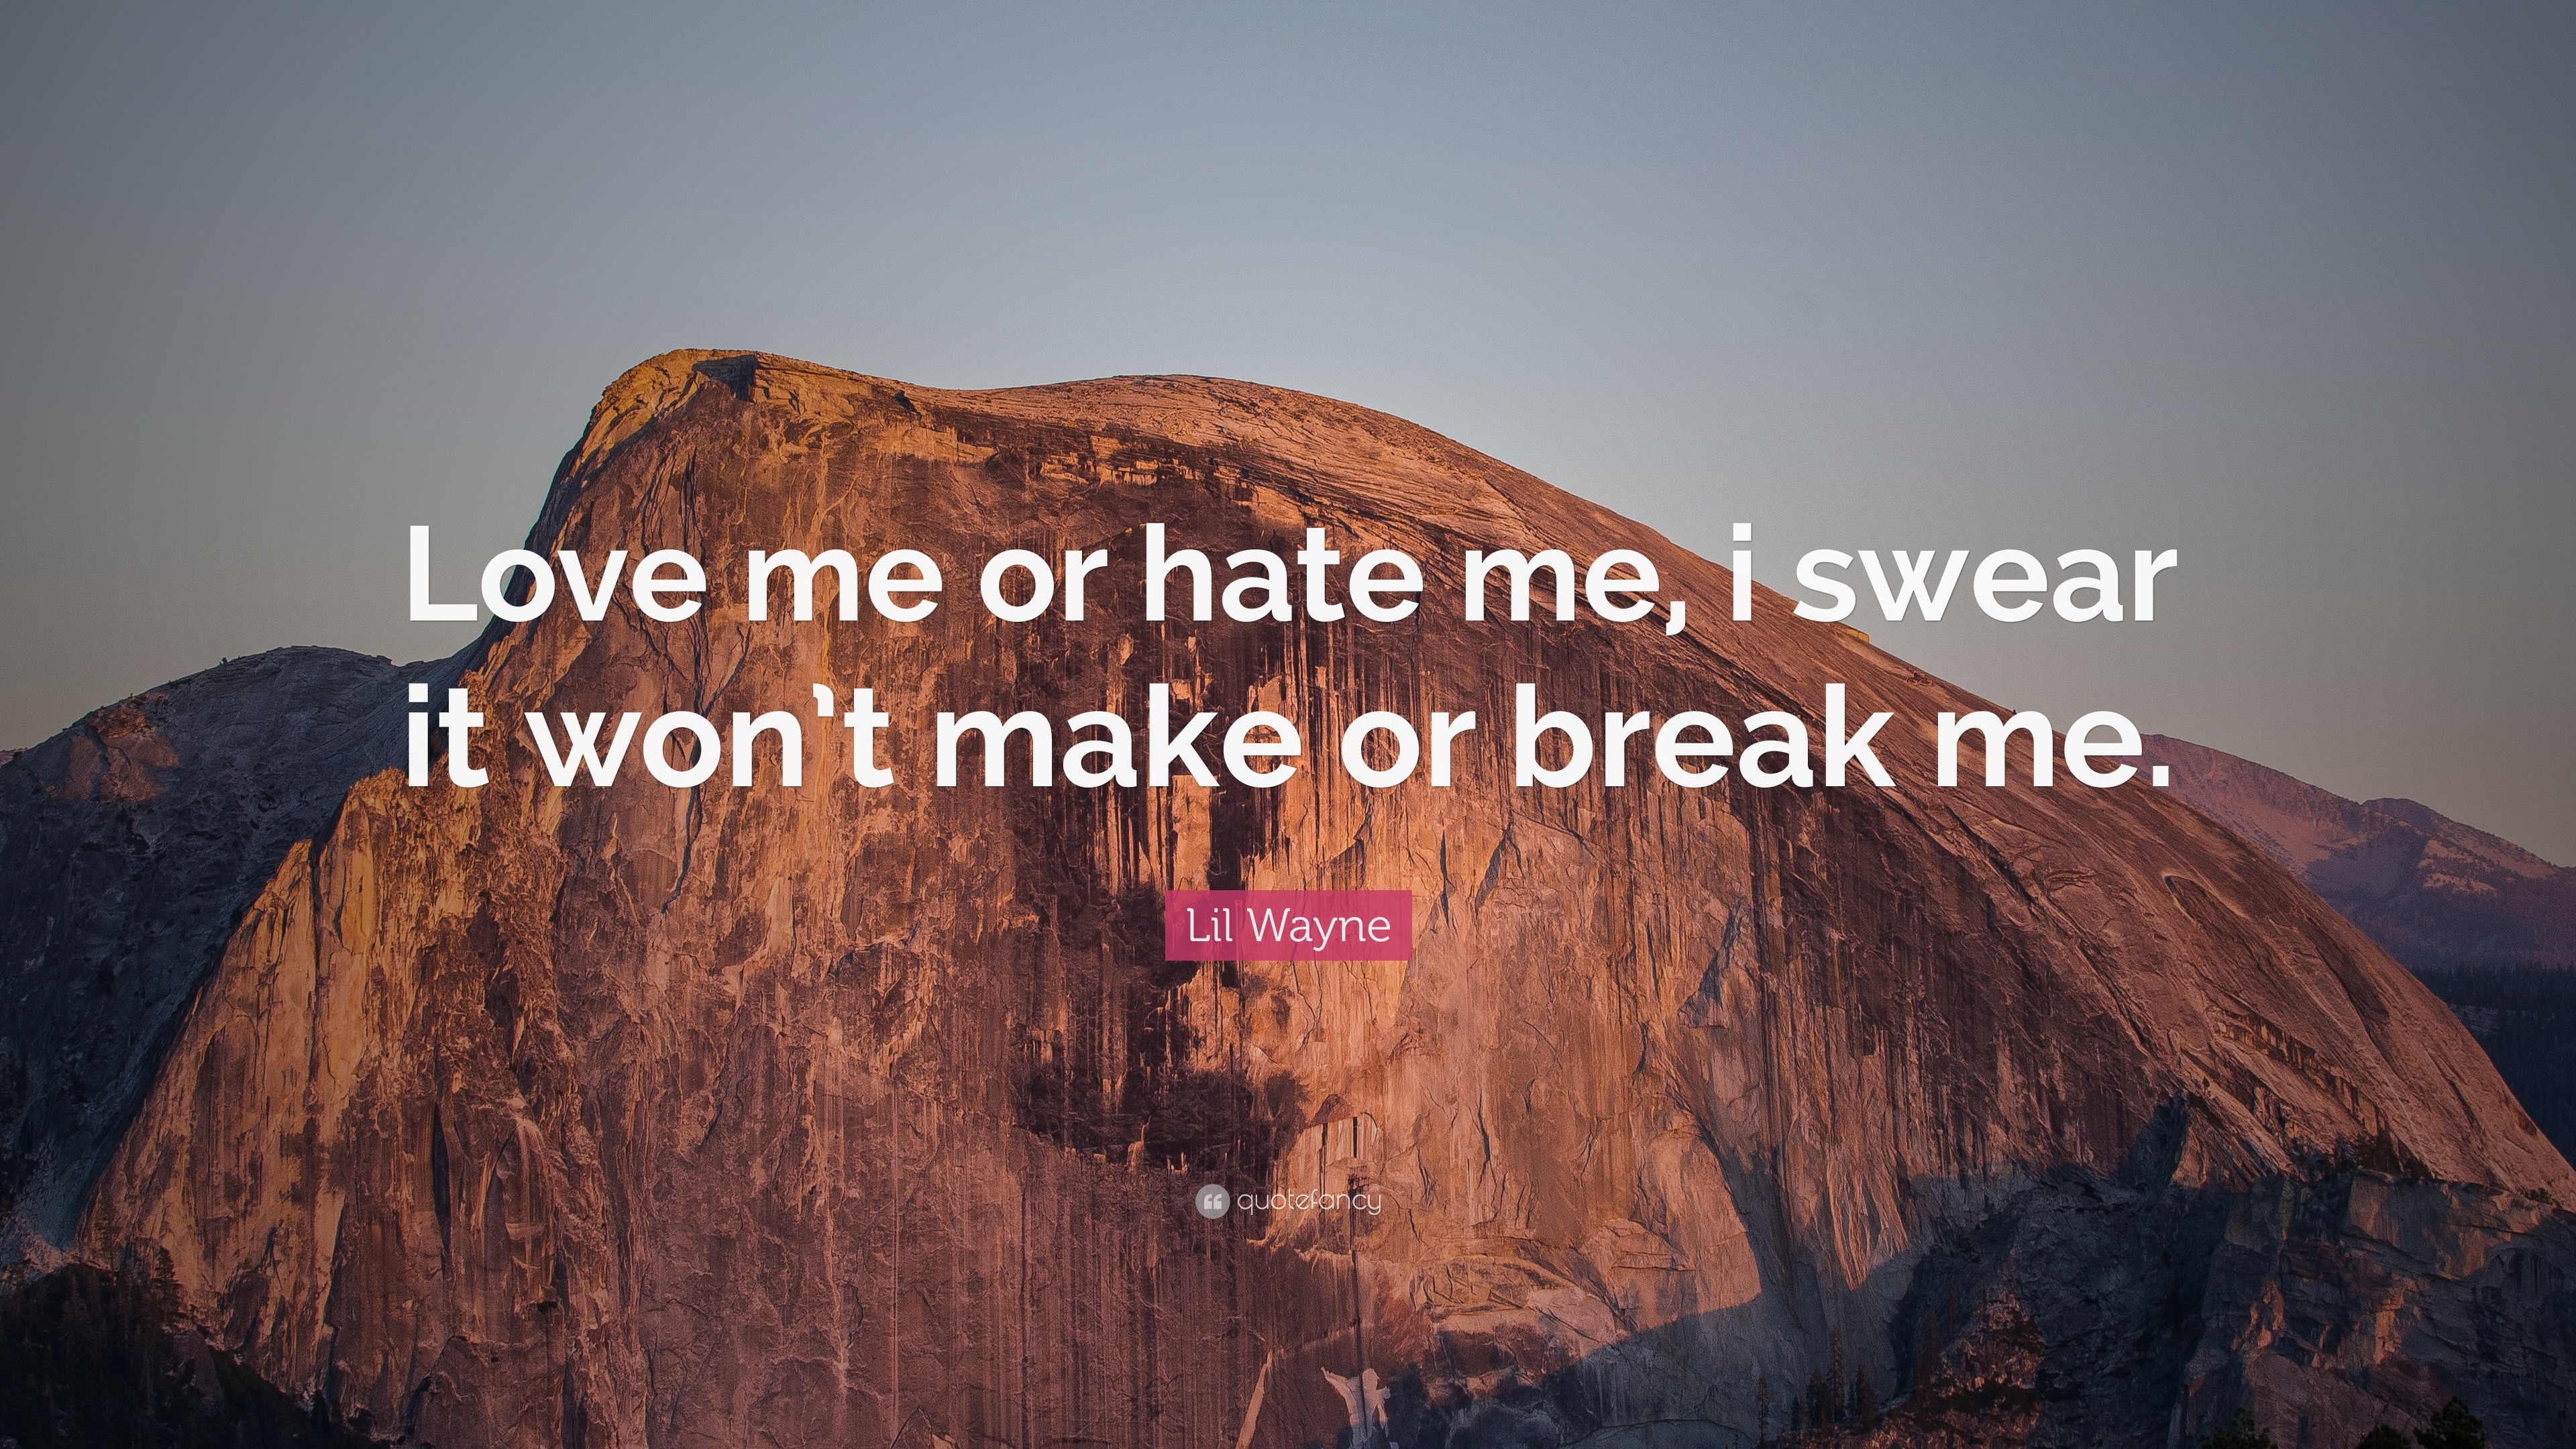 Lil Wayne Quote “Love me or hate me i swear it won